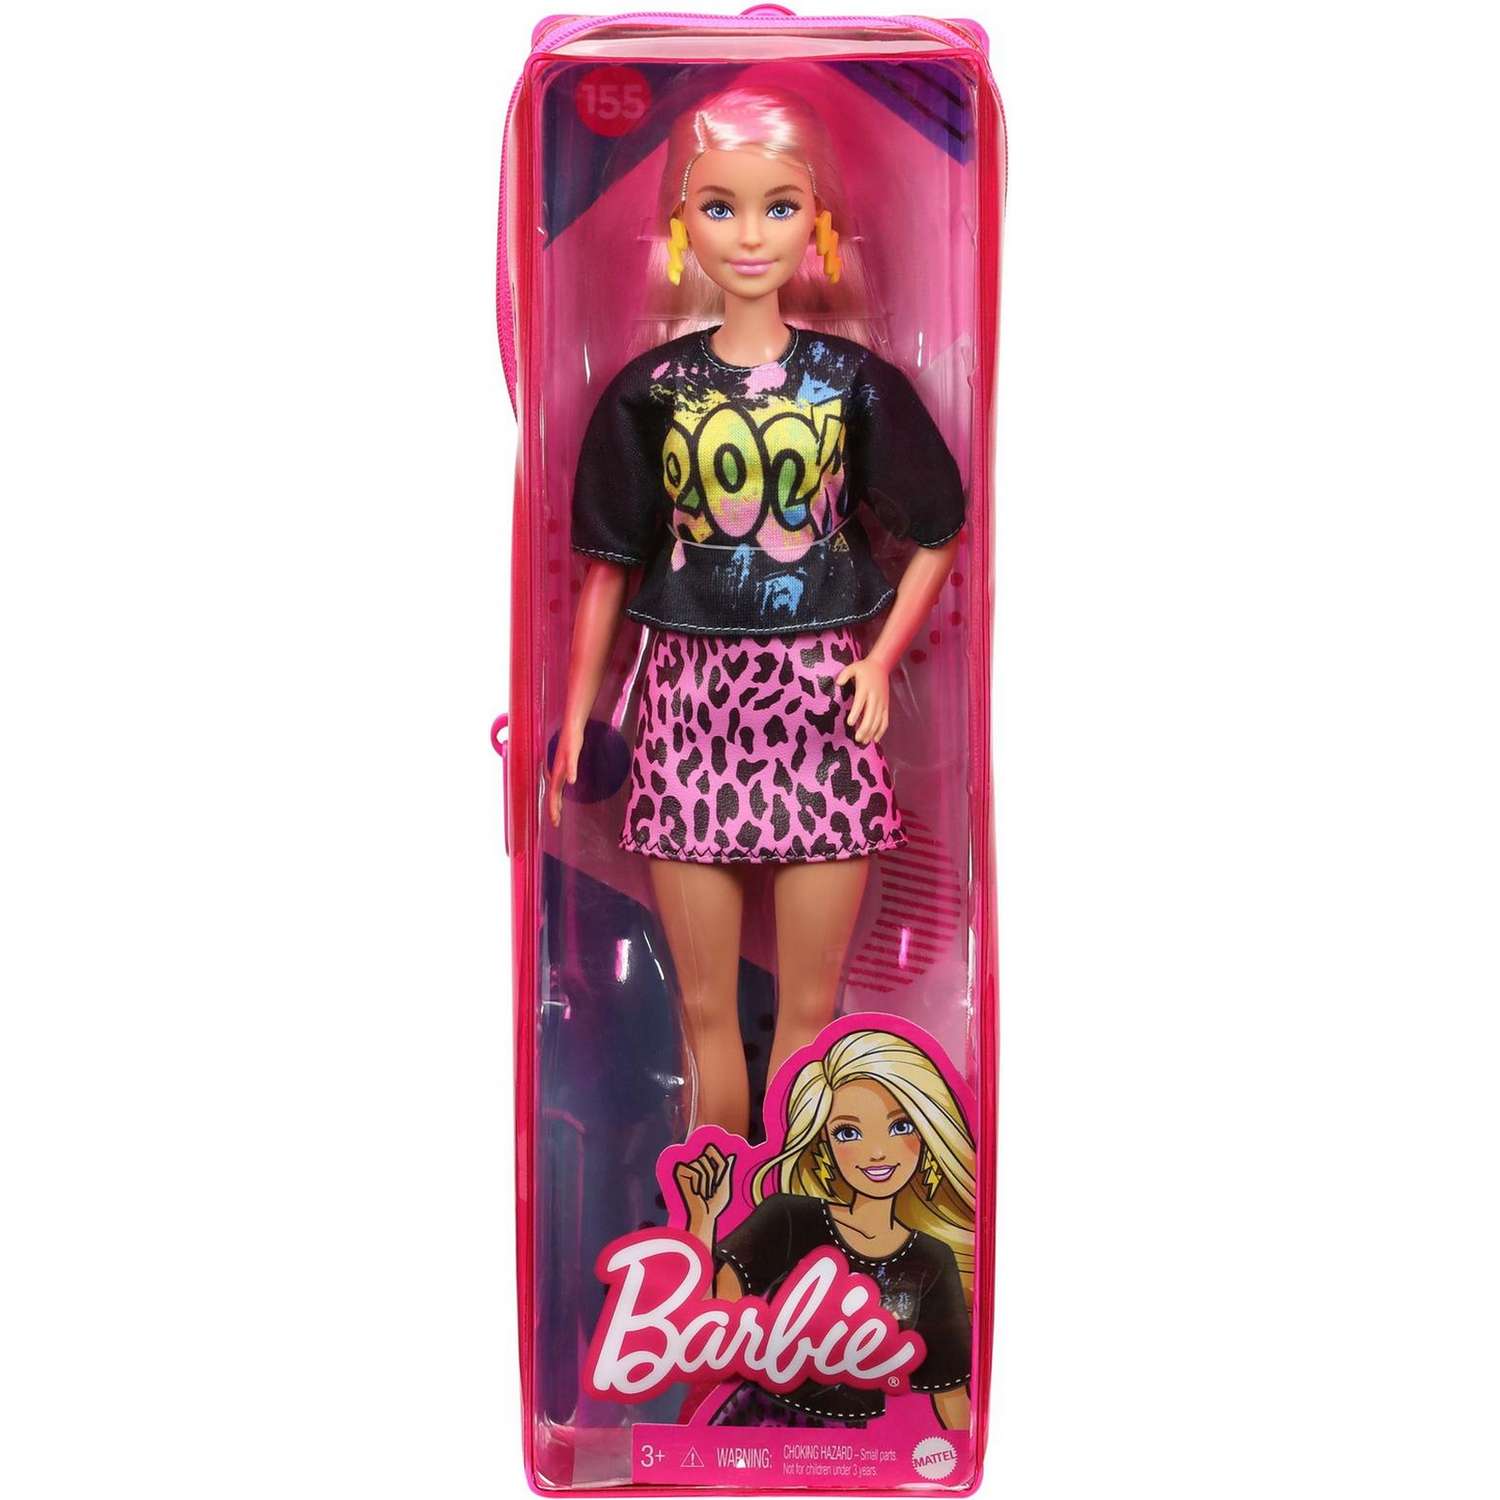 Кукла Barbie Игра с модой 155 GRB47 FBR37 - фото 2